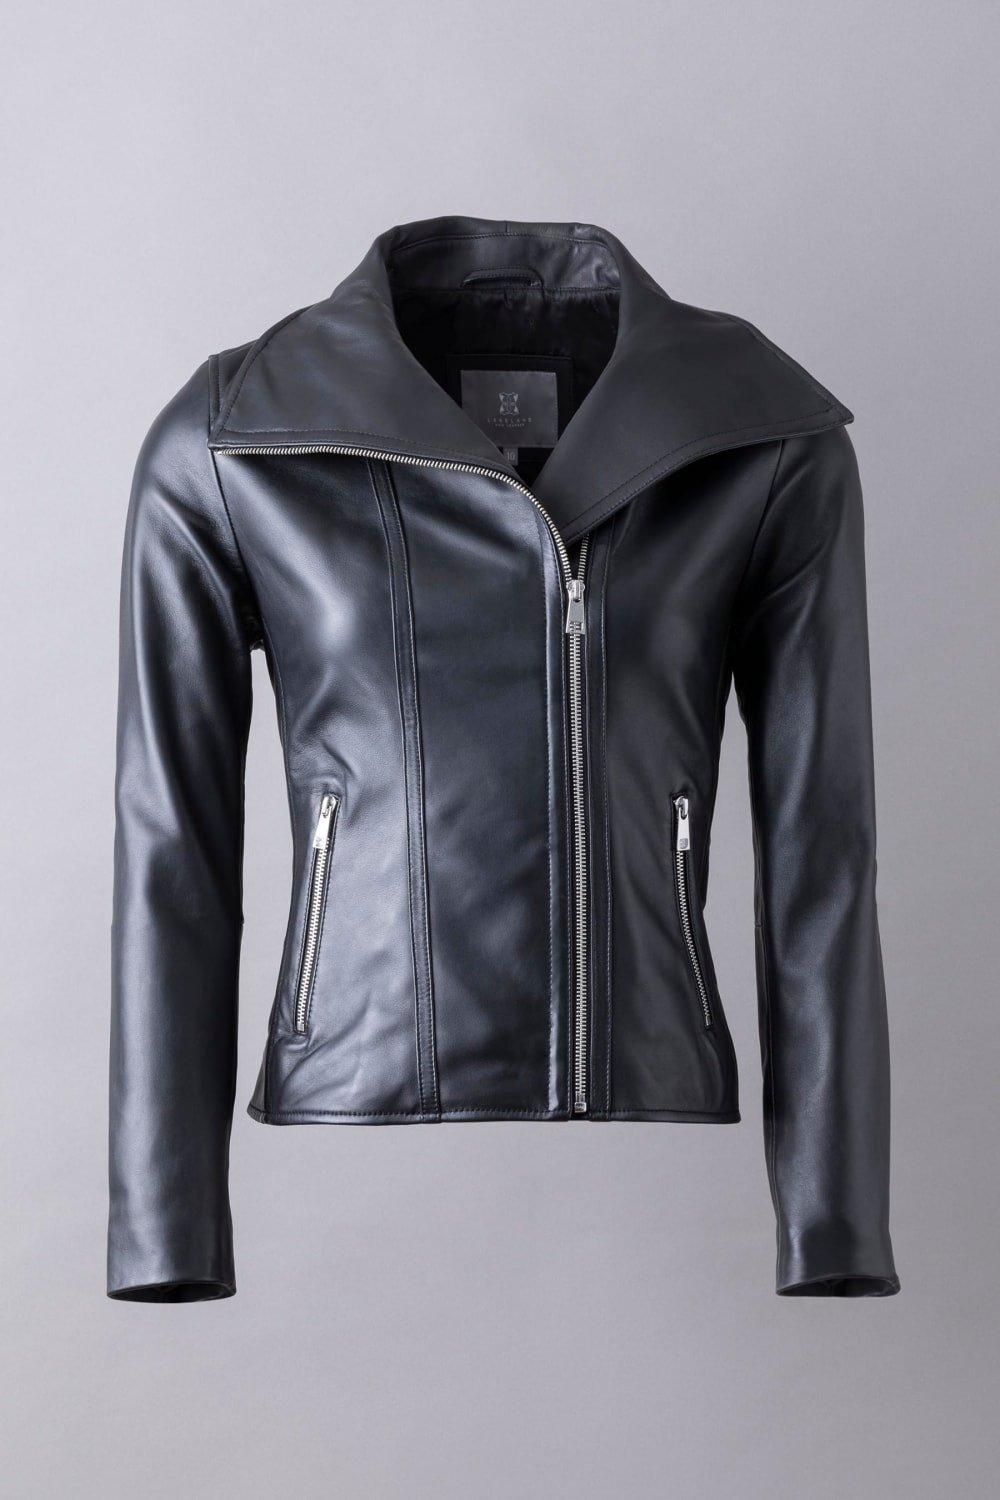 Lakeland Leather Women's 'Moresby' Leather Jacket|Size: 14|black